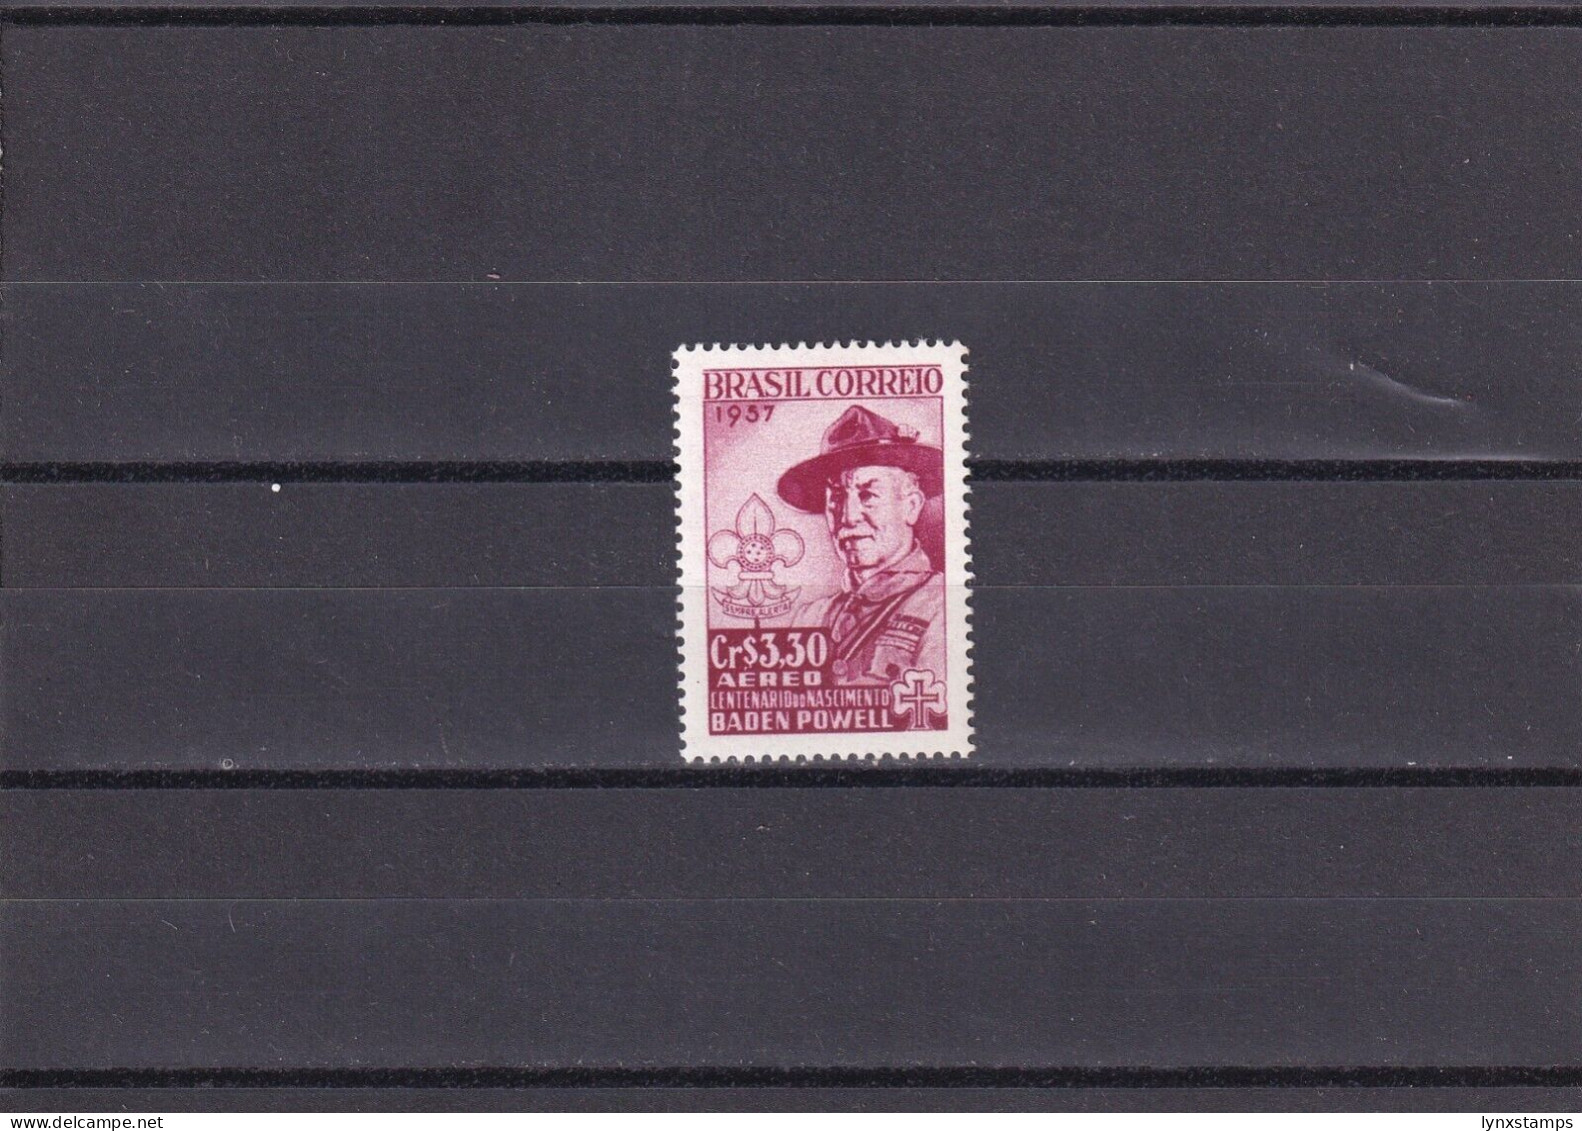 SA06 Brazil 1957 Airmail-100th Anniv Of The Birth Of Lord Baden-Powell MLH - Ongebruikt